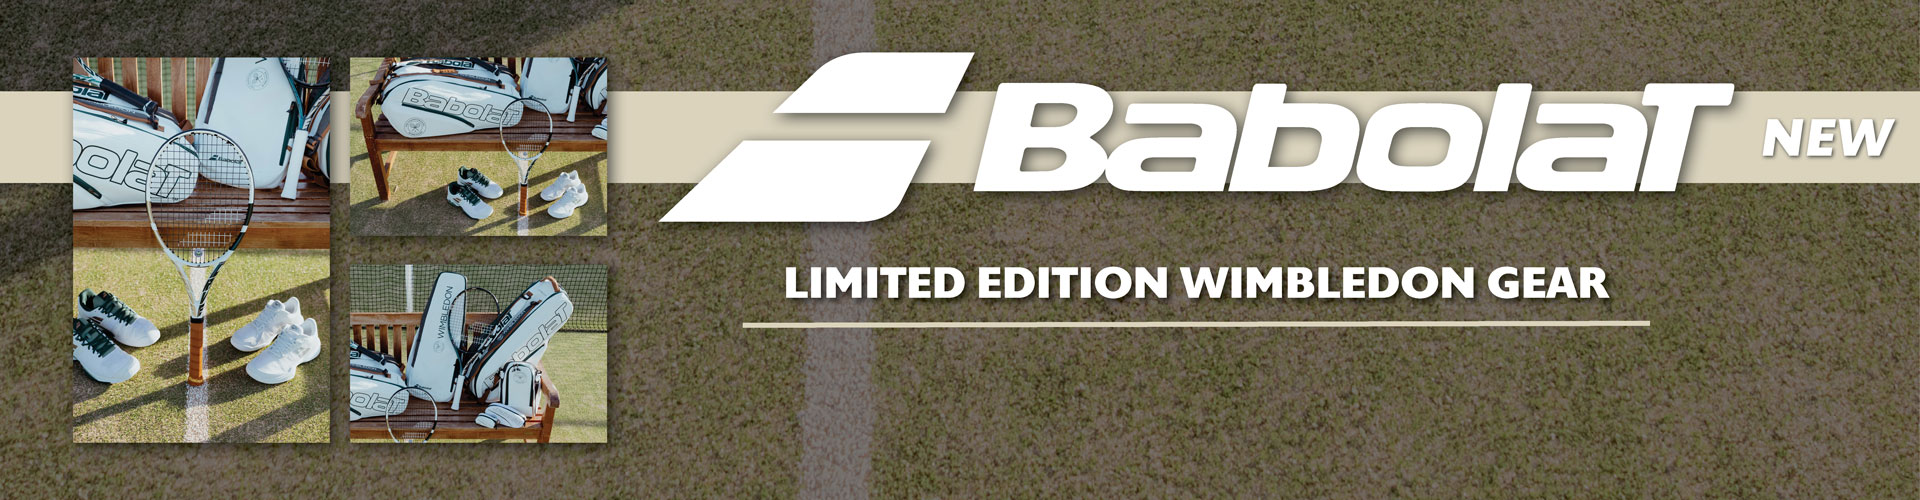 Babolat Wimbledon Limited Edition